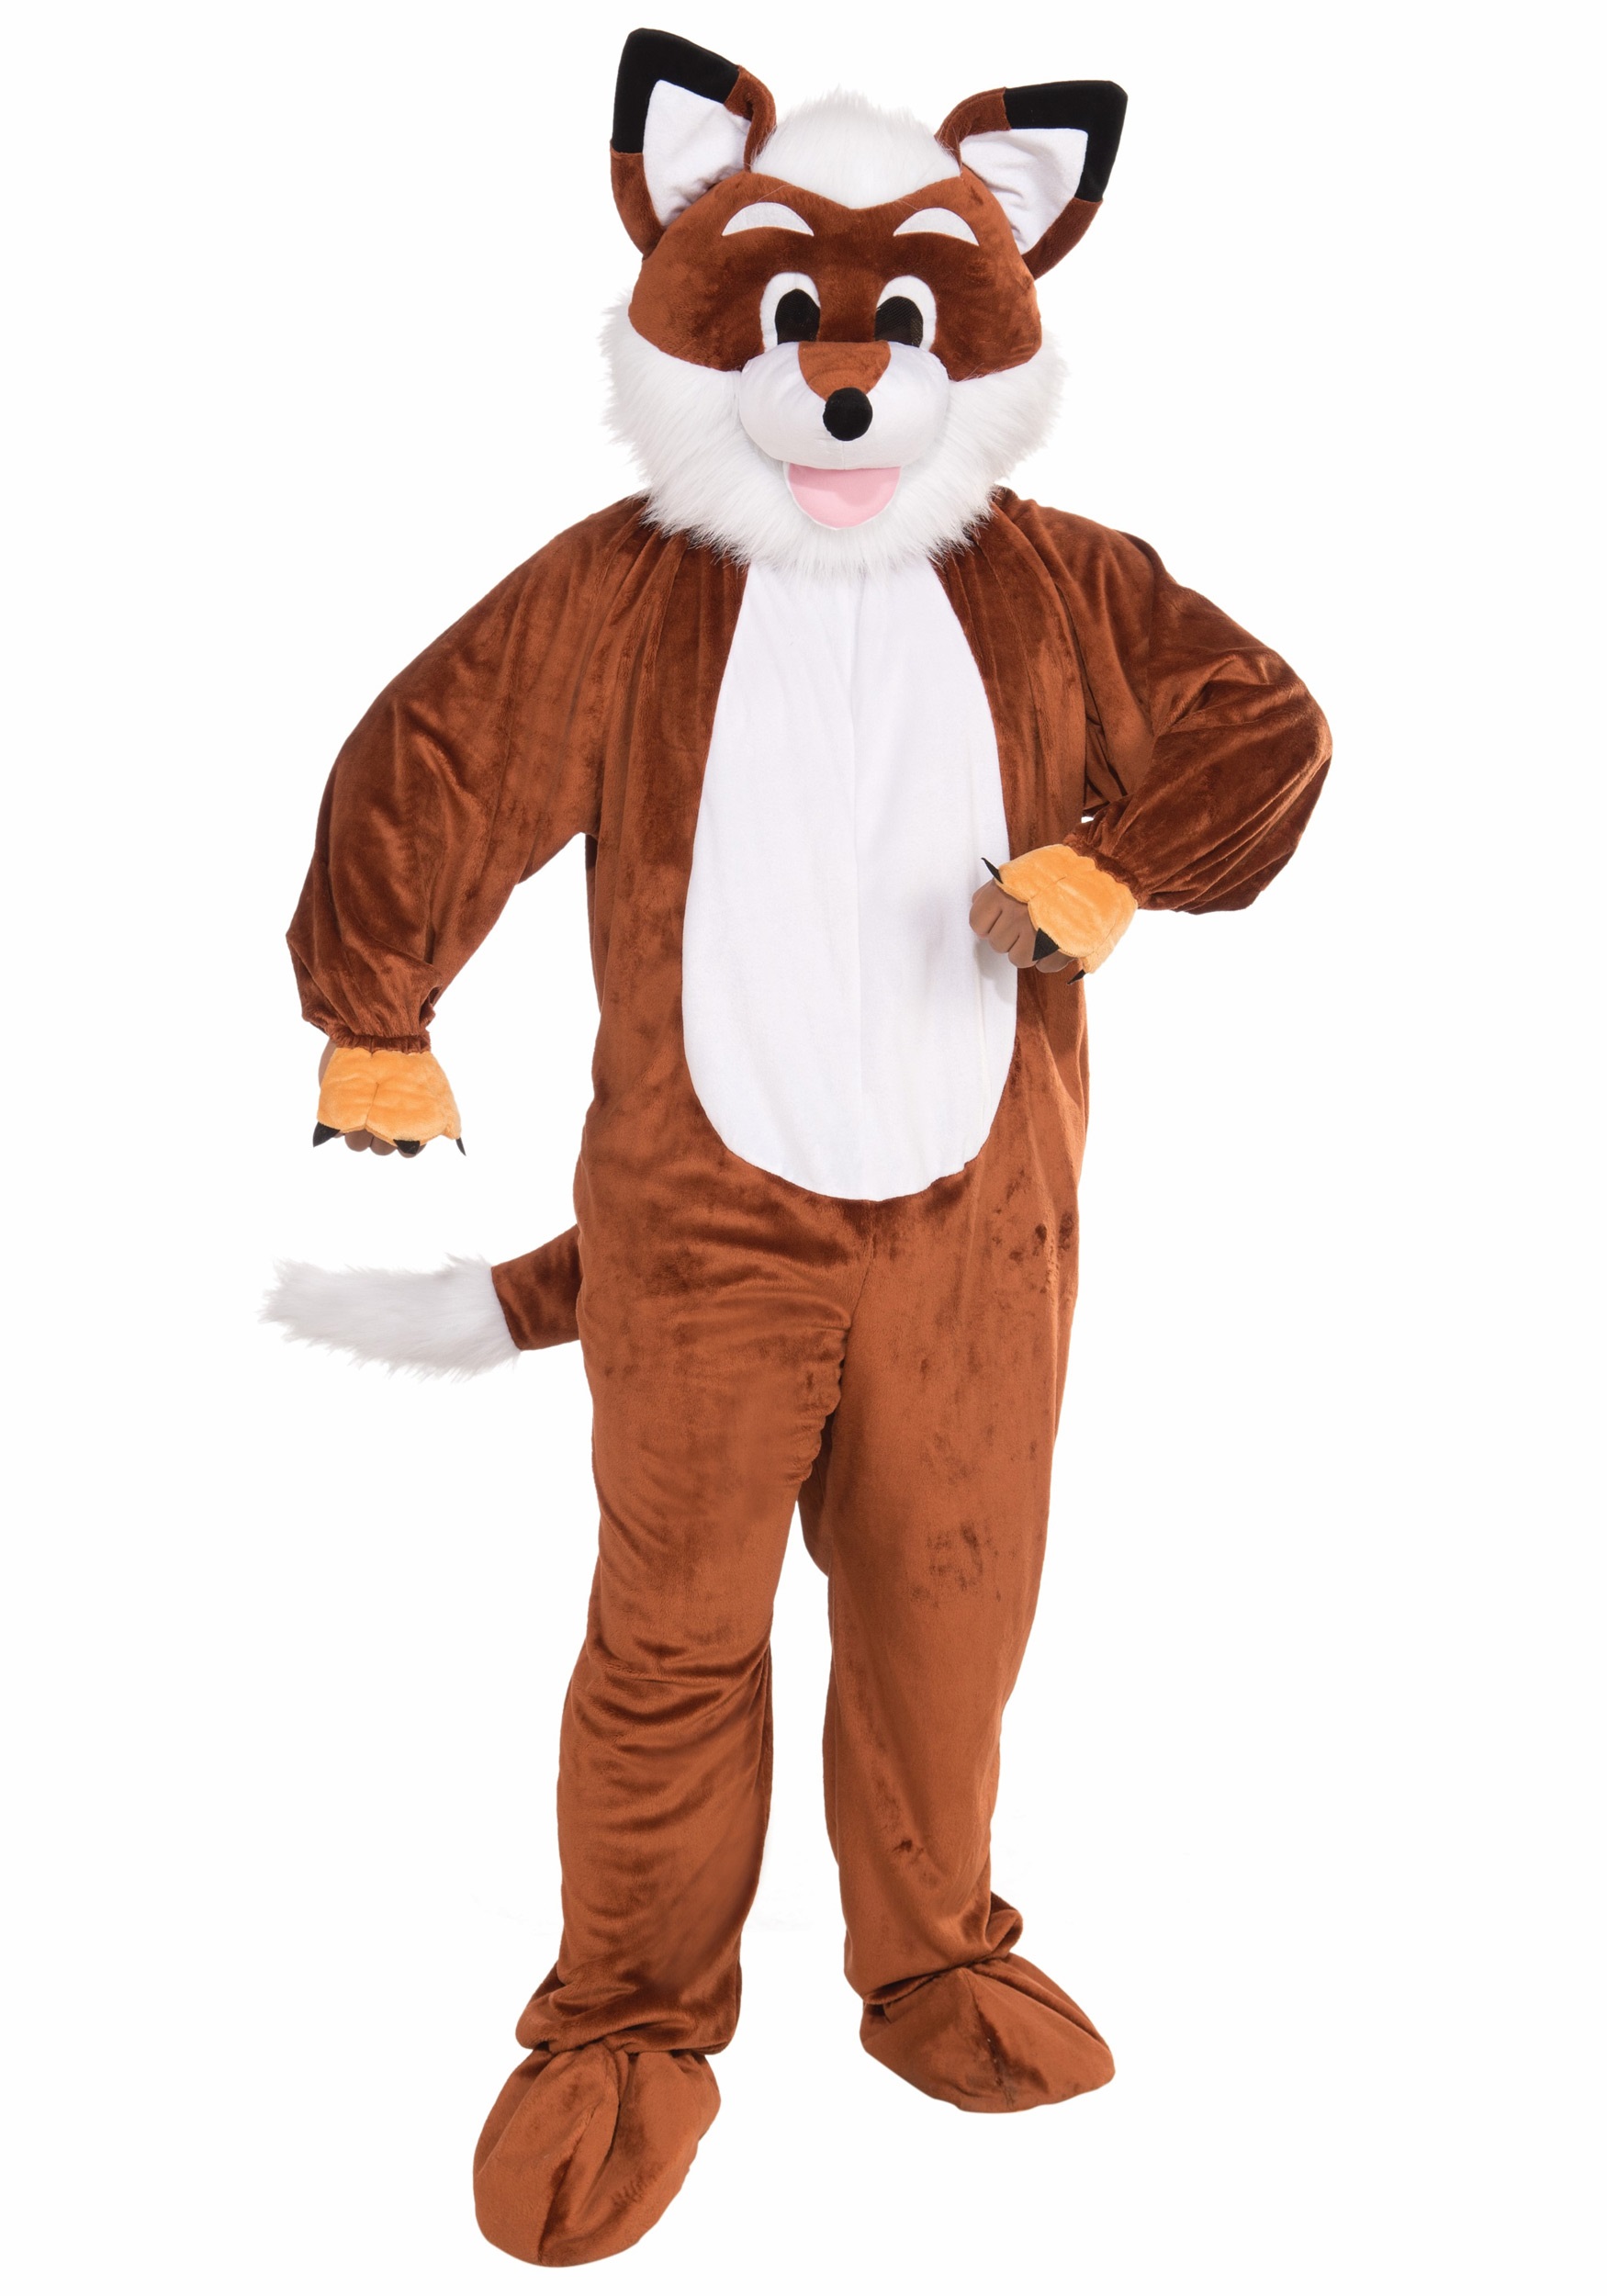 The Fox Costume